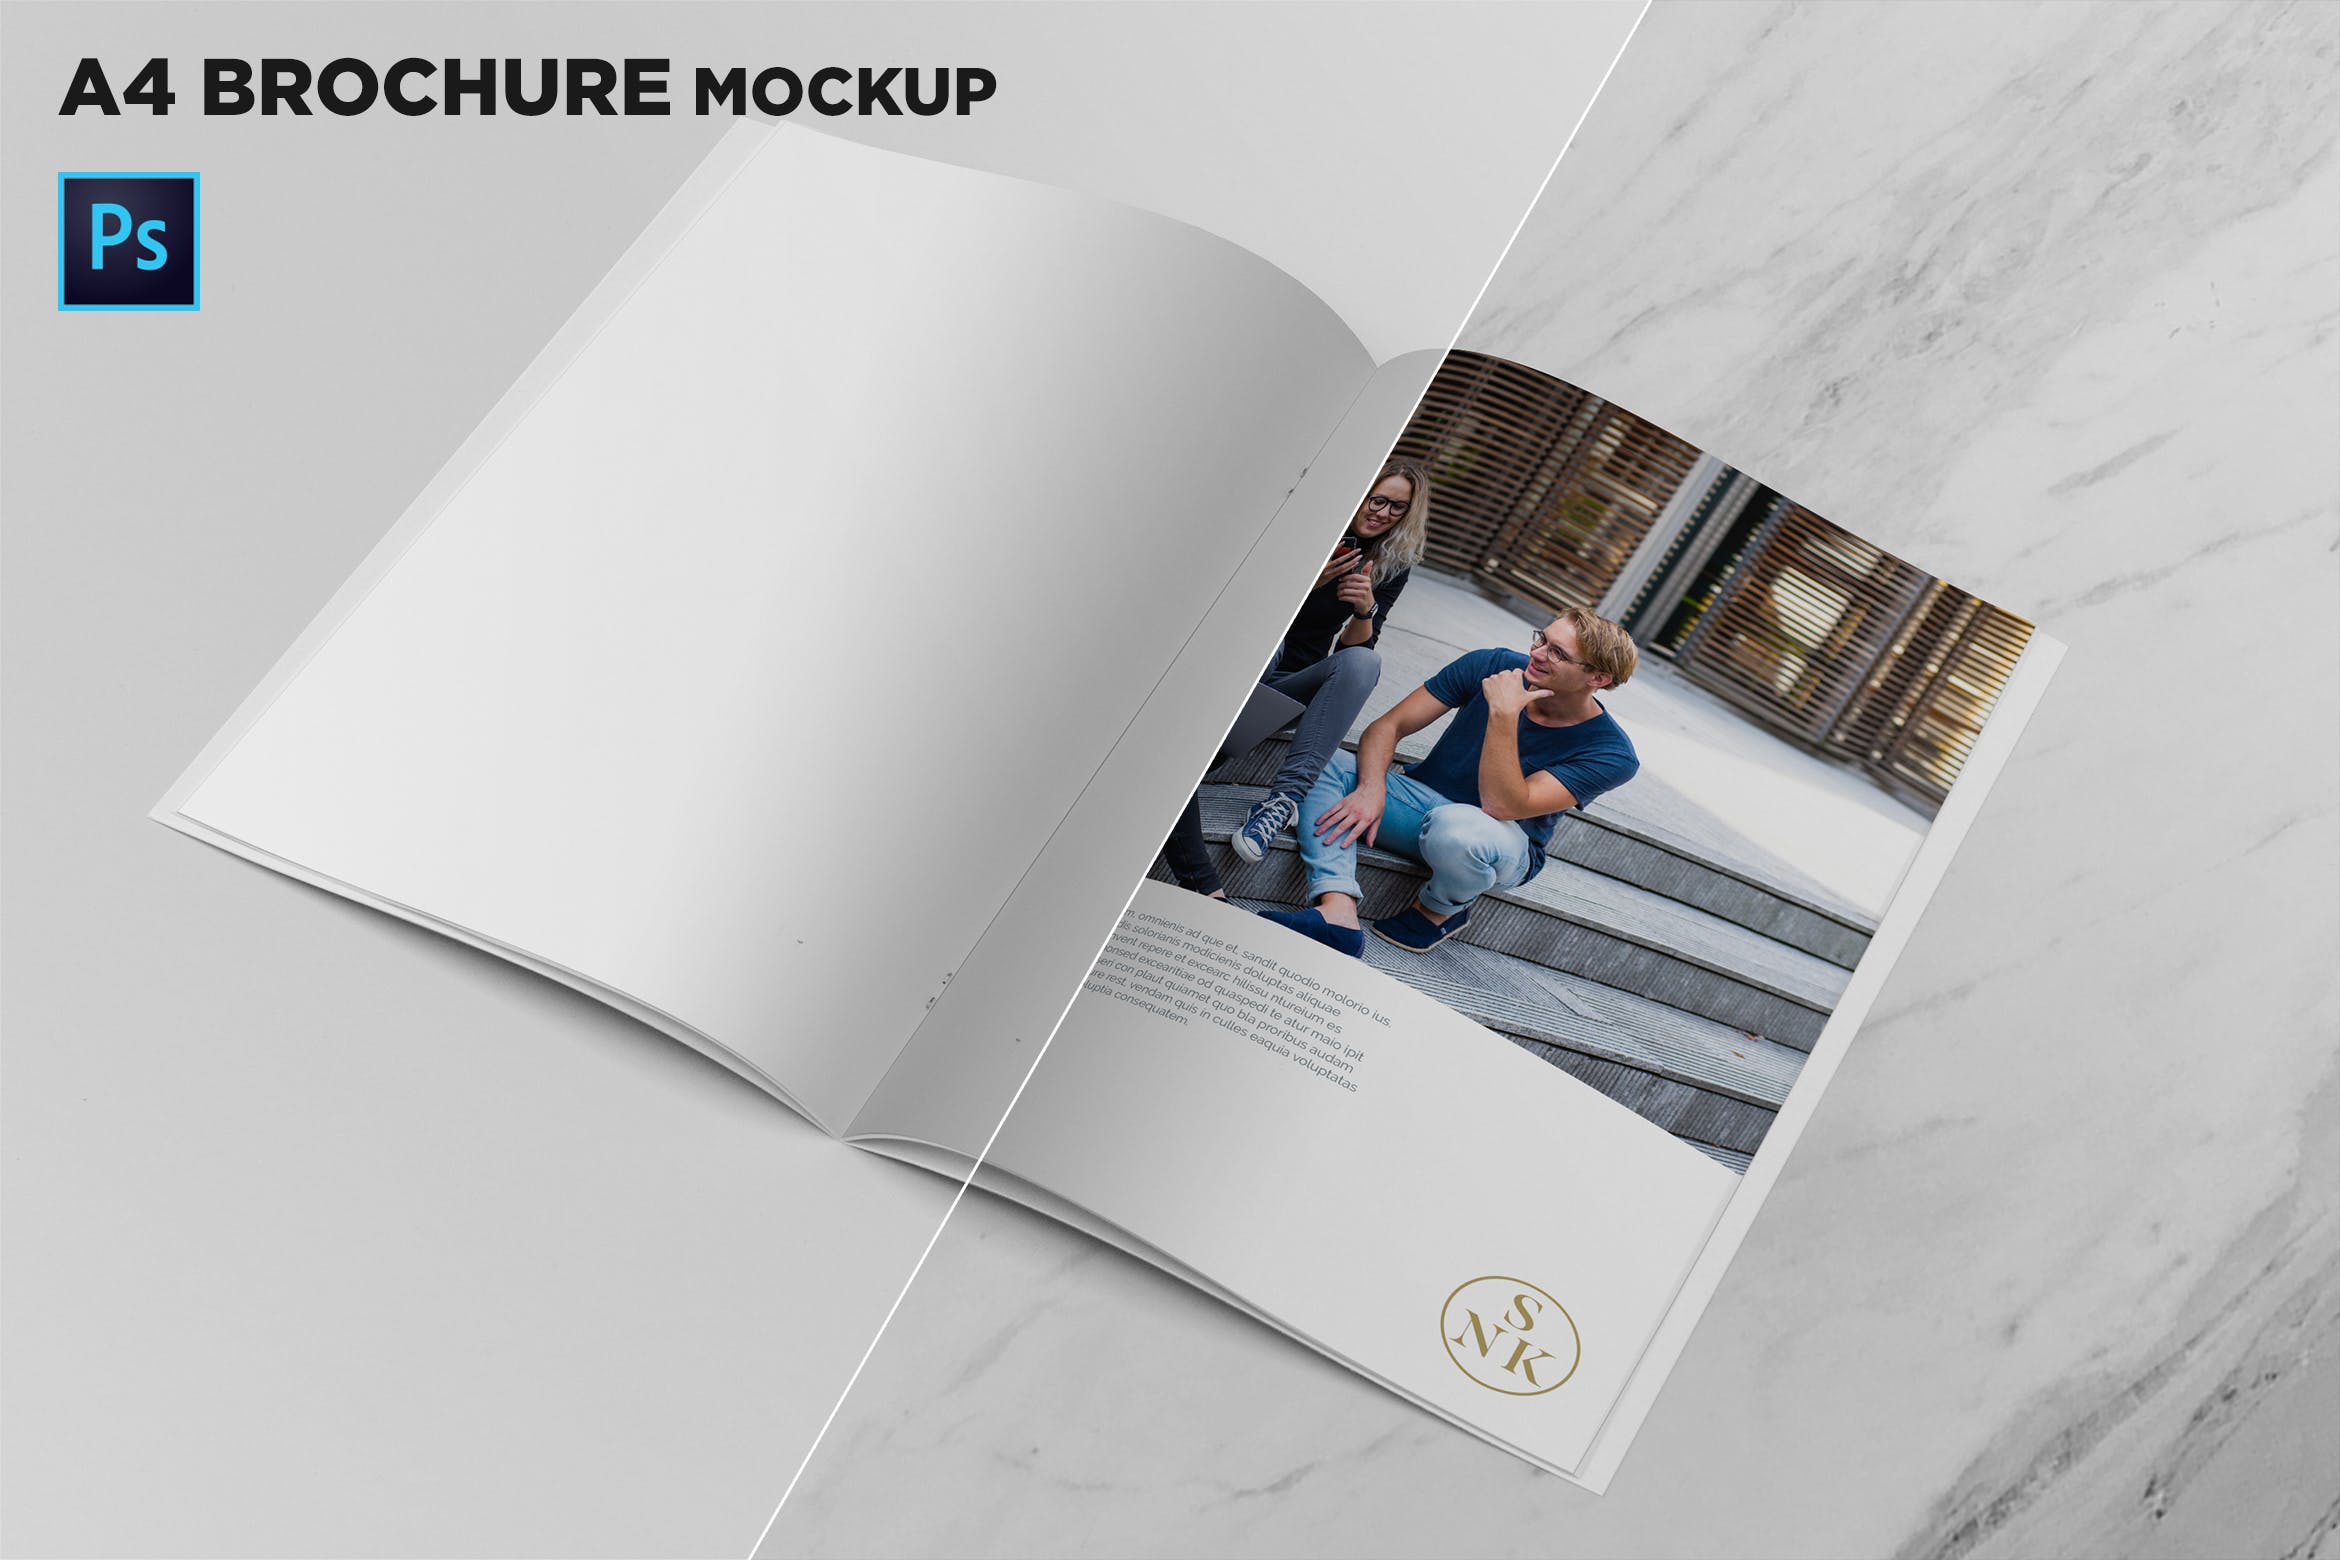 A4宣传小册子/企业画册内页排版设计效果图样机素材库精选 A4 Brochure Mockup Open Pages插图